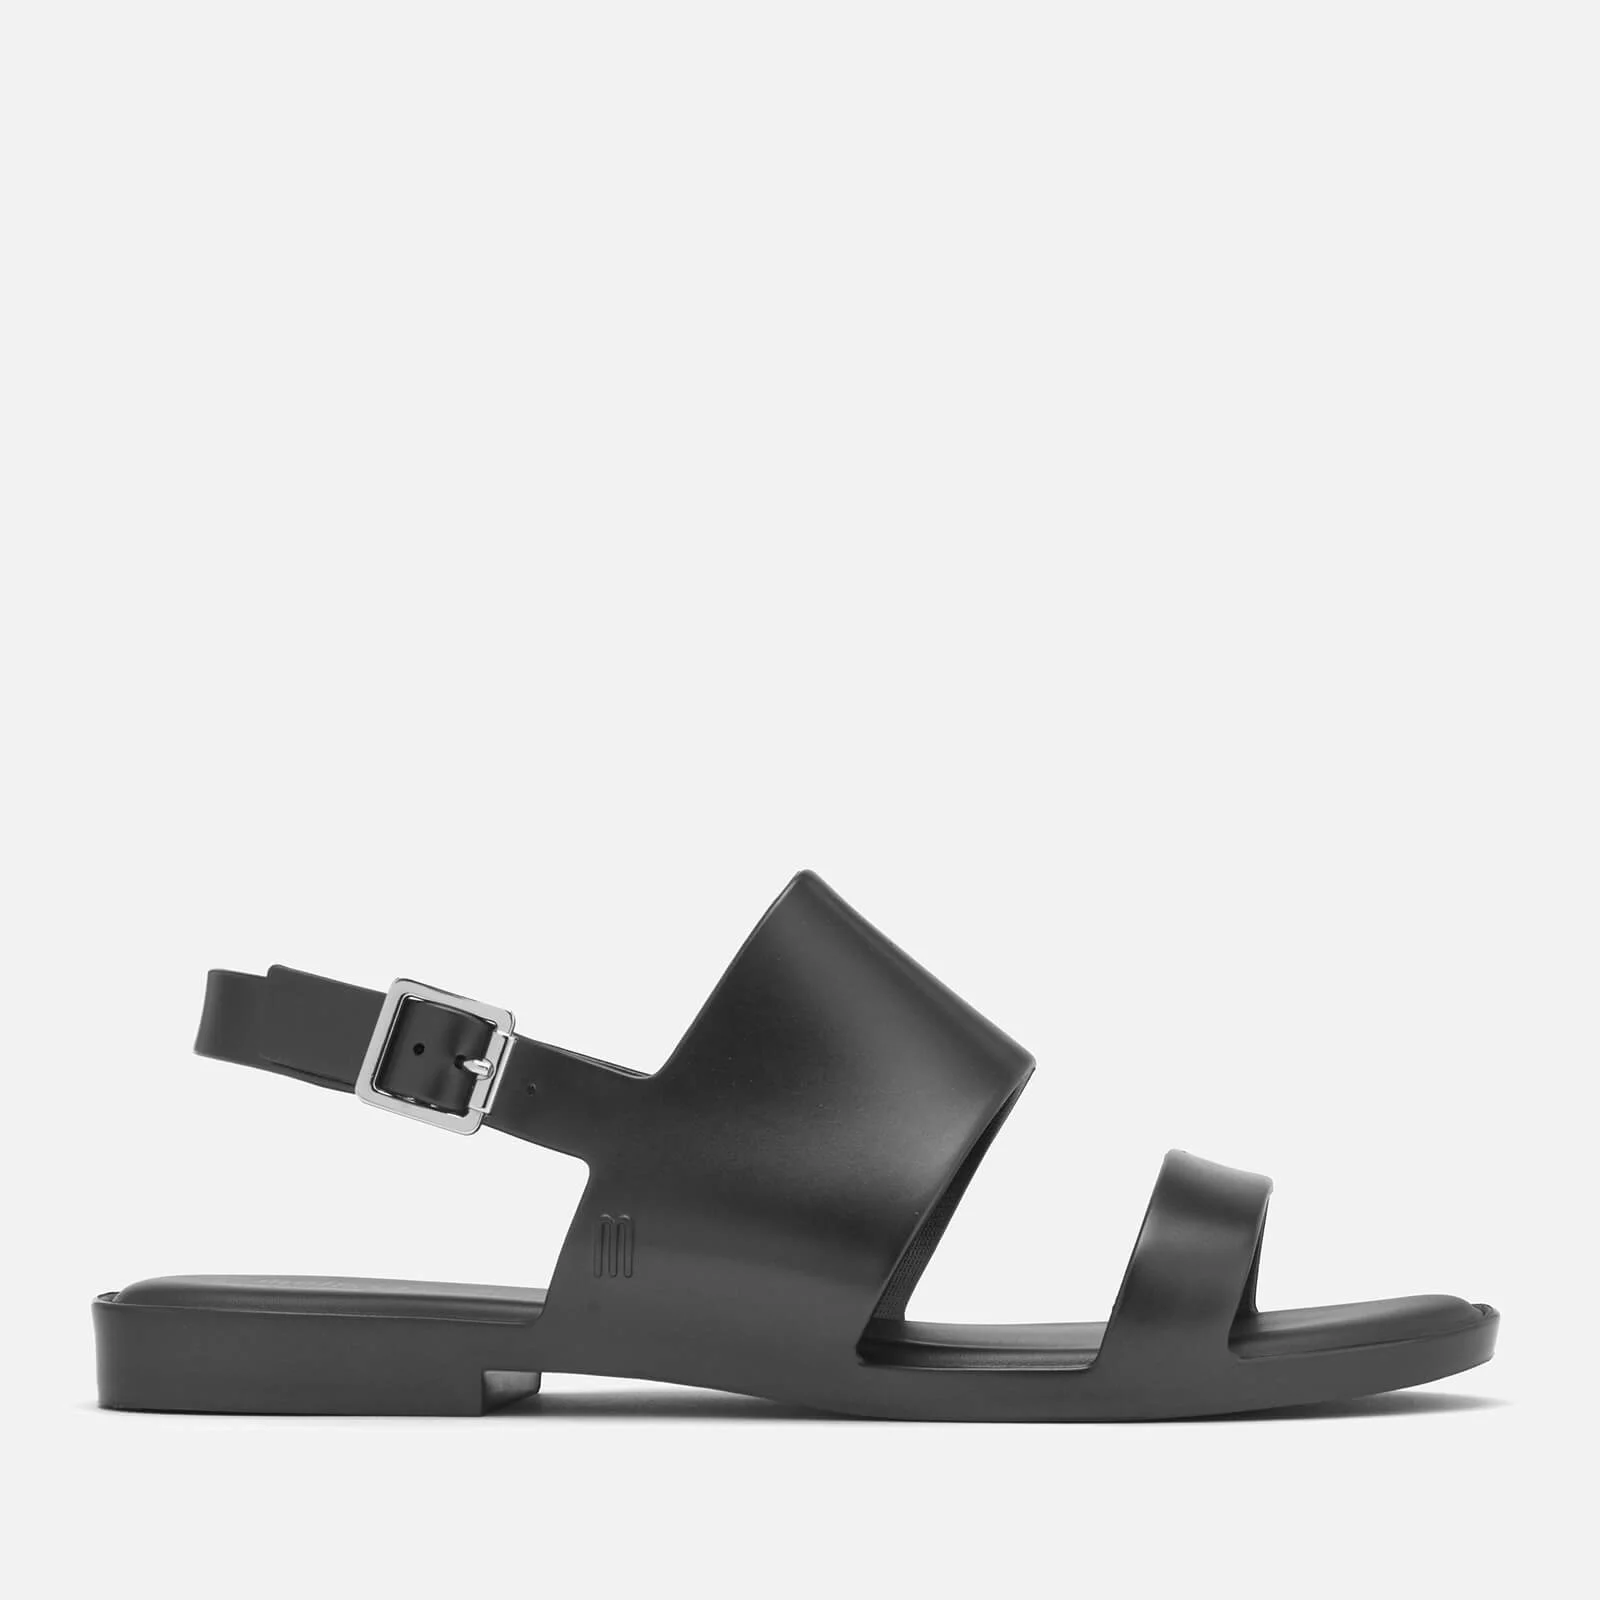 Melissa Women's Classy 19 Flat Sandals - Black Image 1